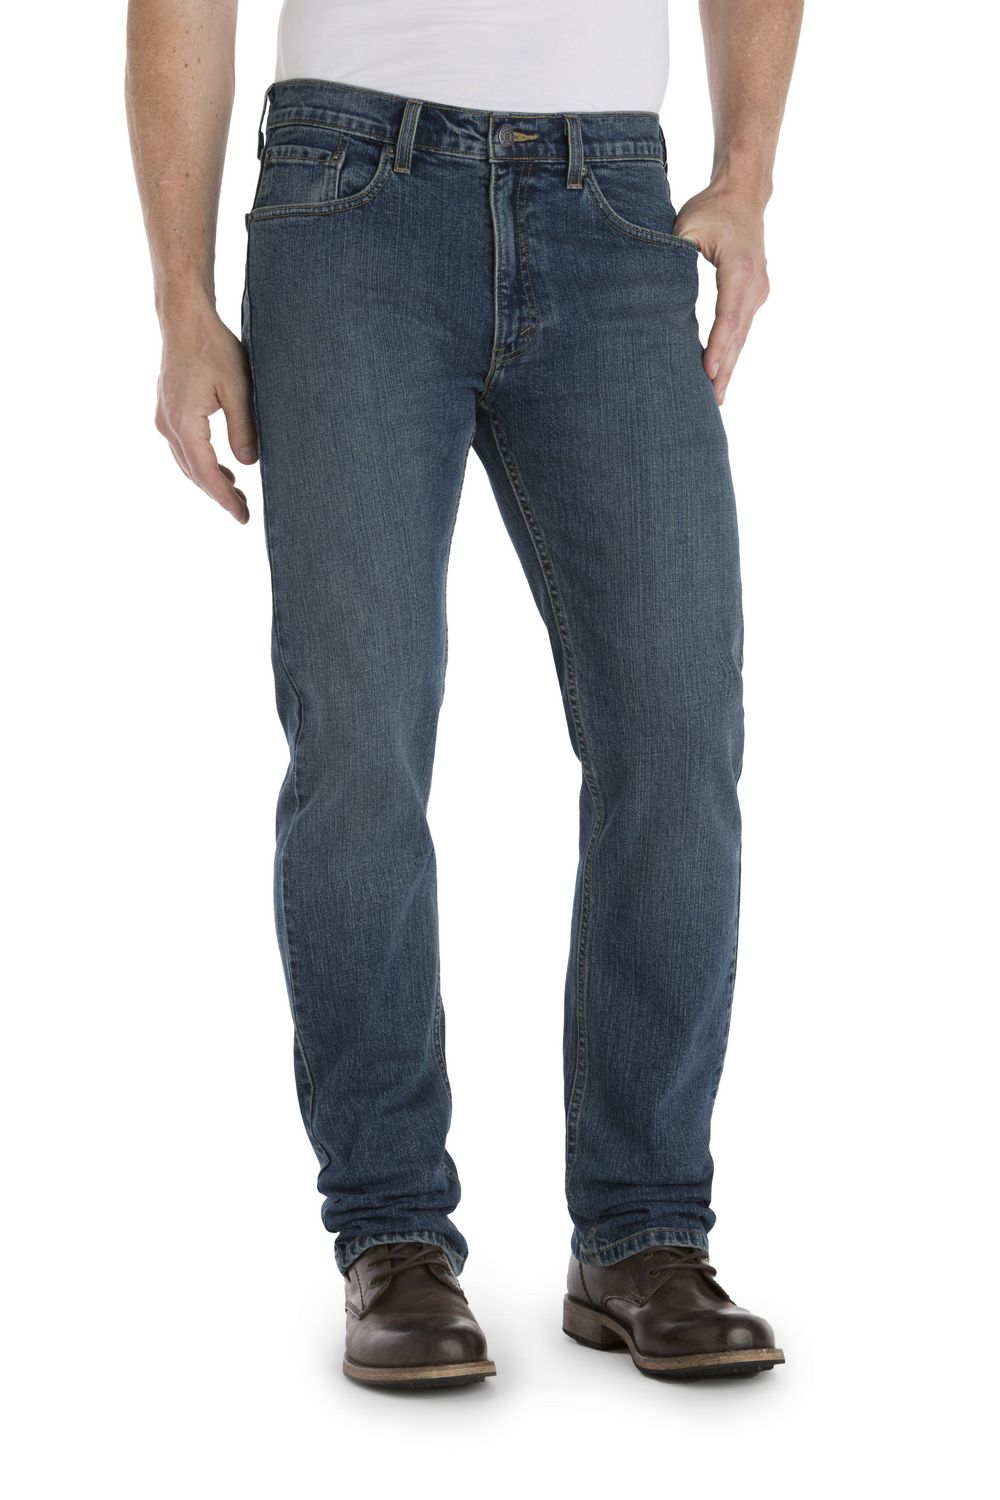 best price on mens levi jeans